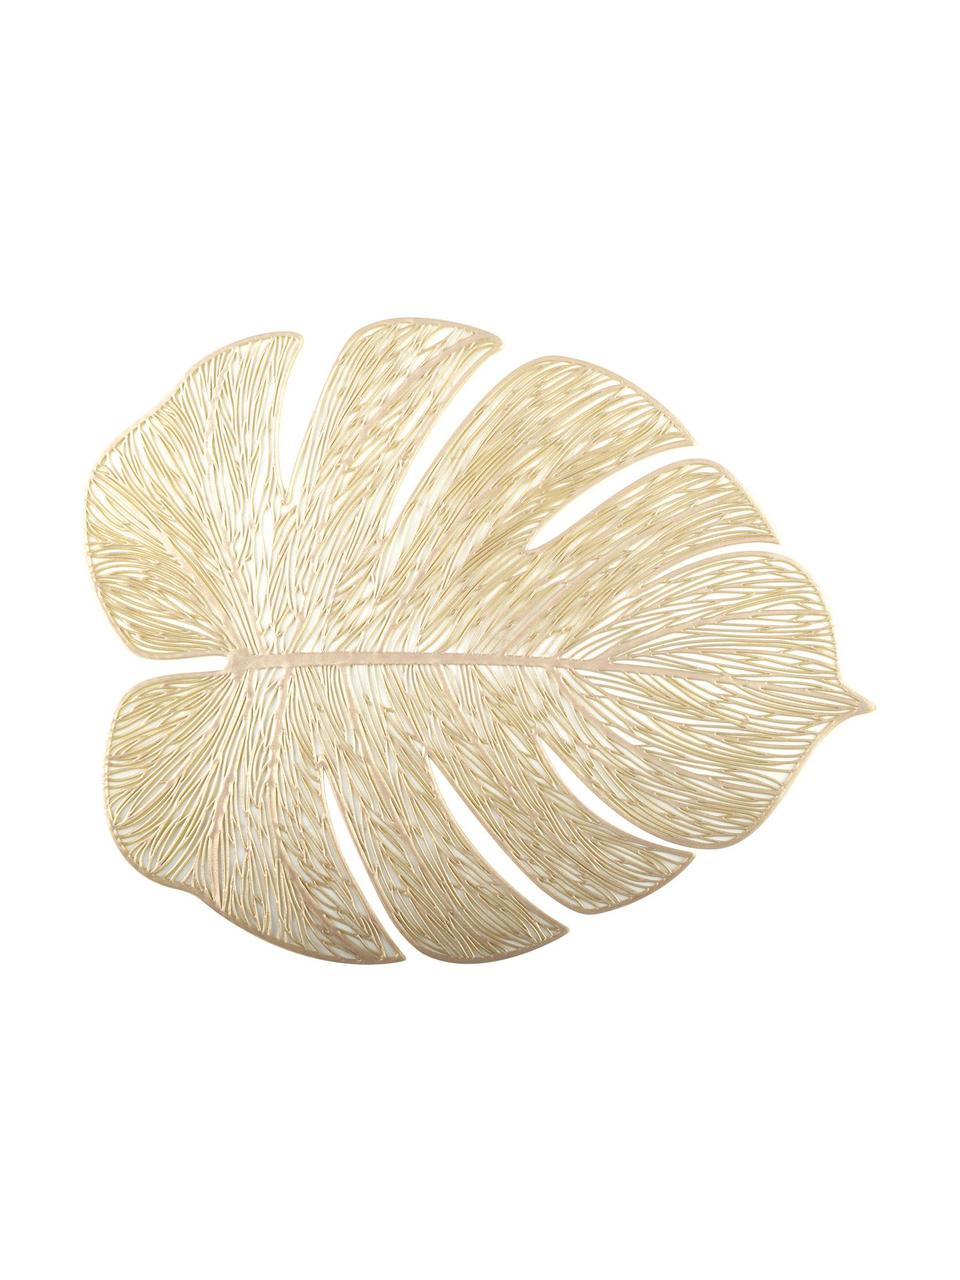 Gouden kunststof placemats Leaf in bladvorm, 2 stuks, Kunststof, Goudkleurig, B 33 x L 40 cm